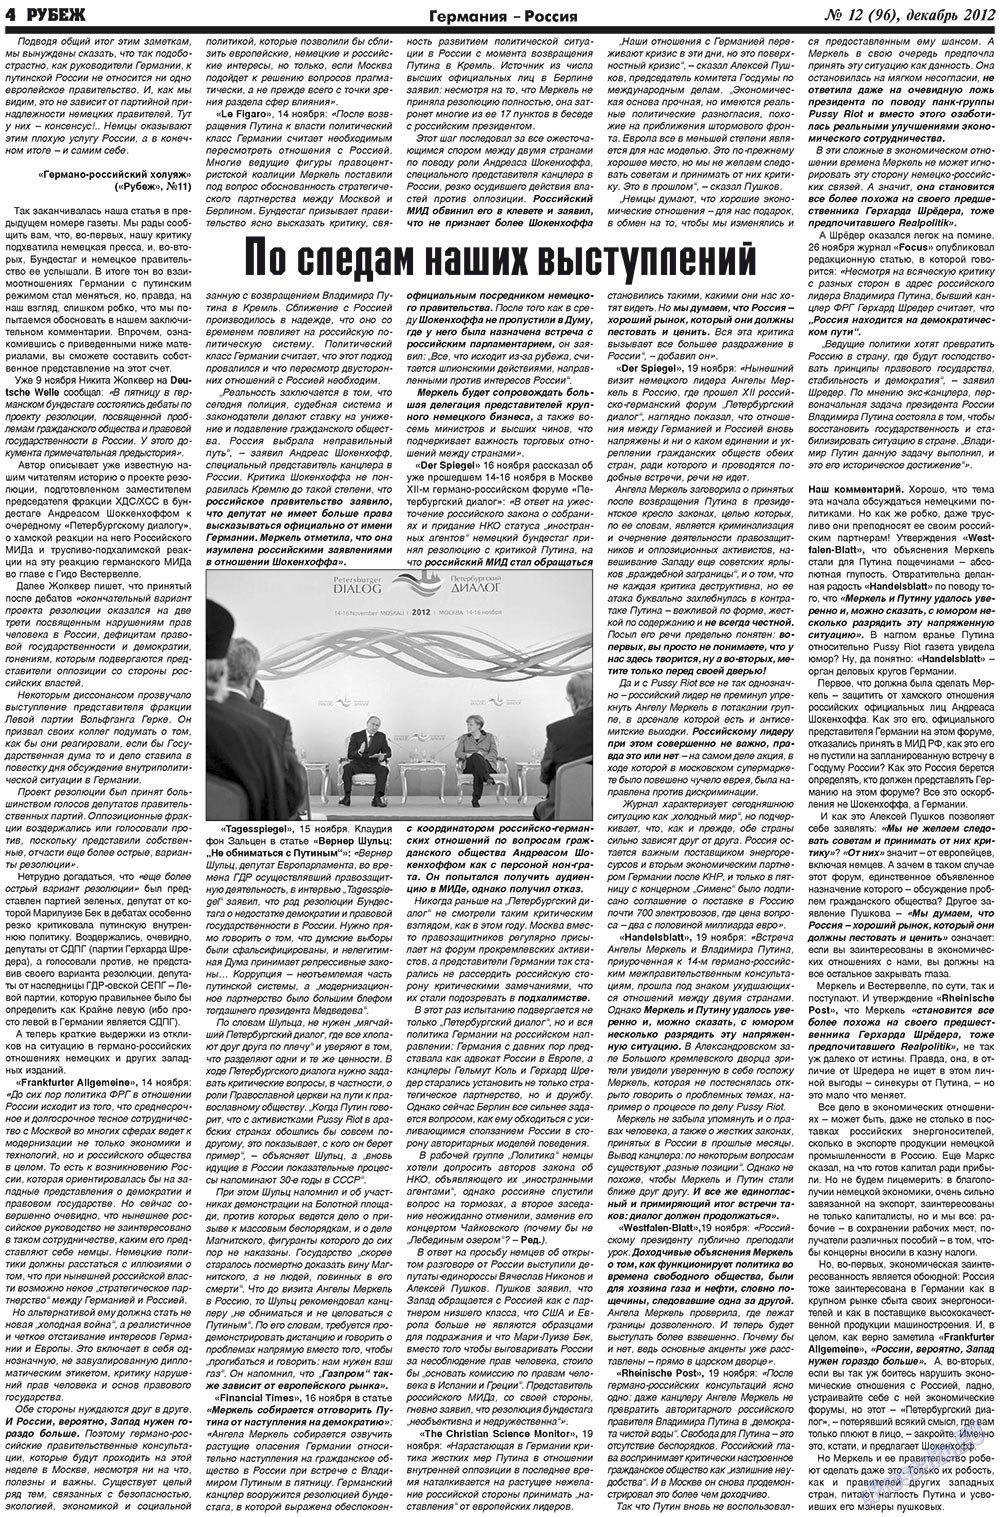 Рубеж, газета. 2012 №12 стр.4